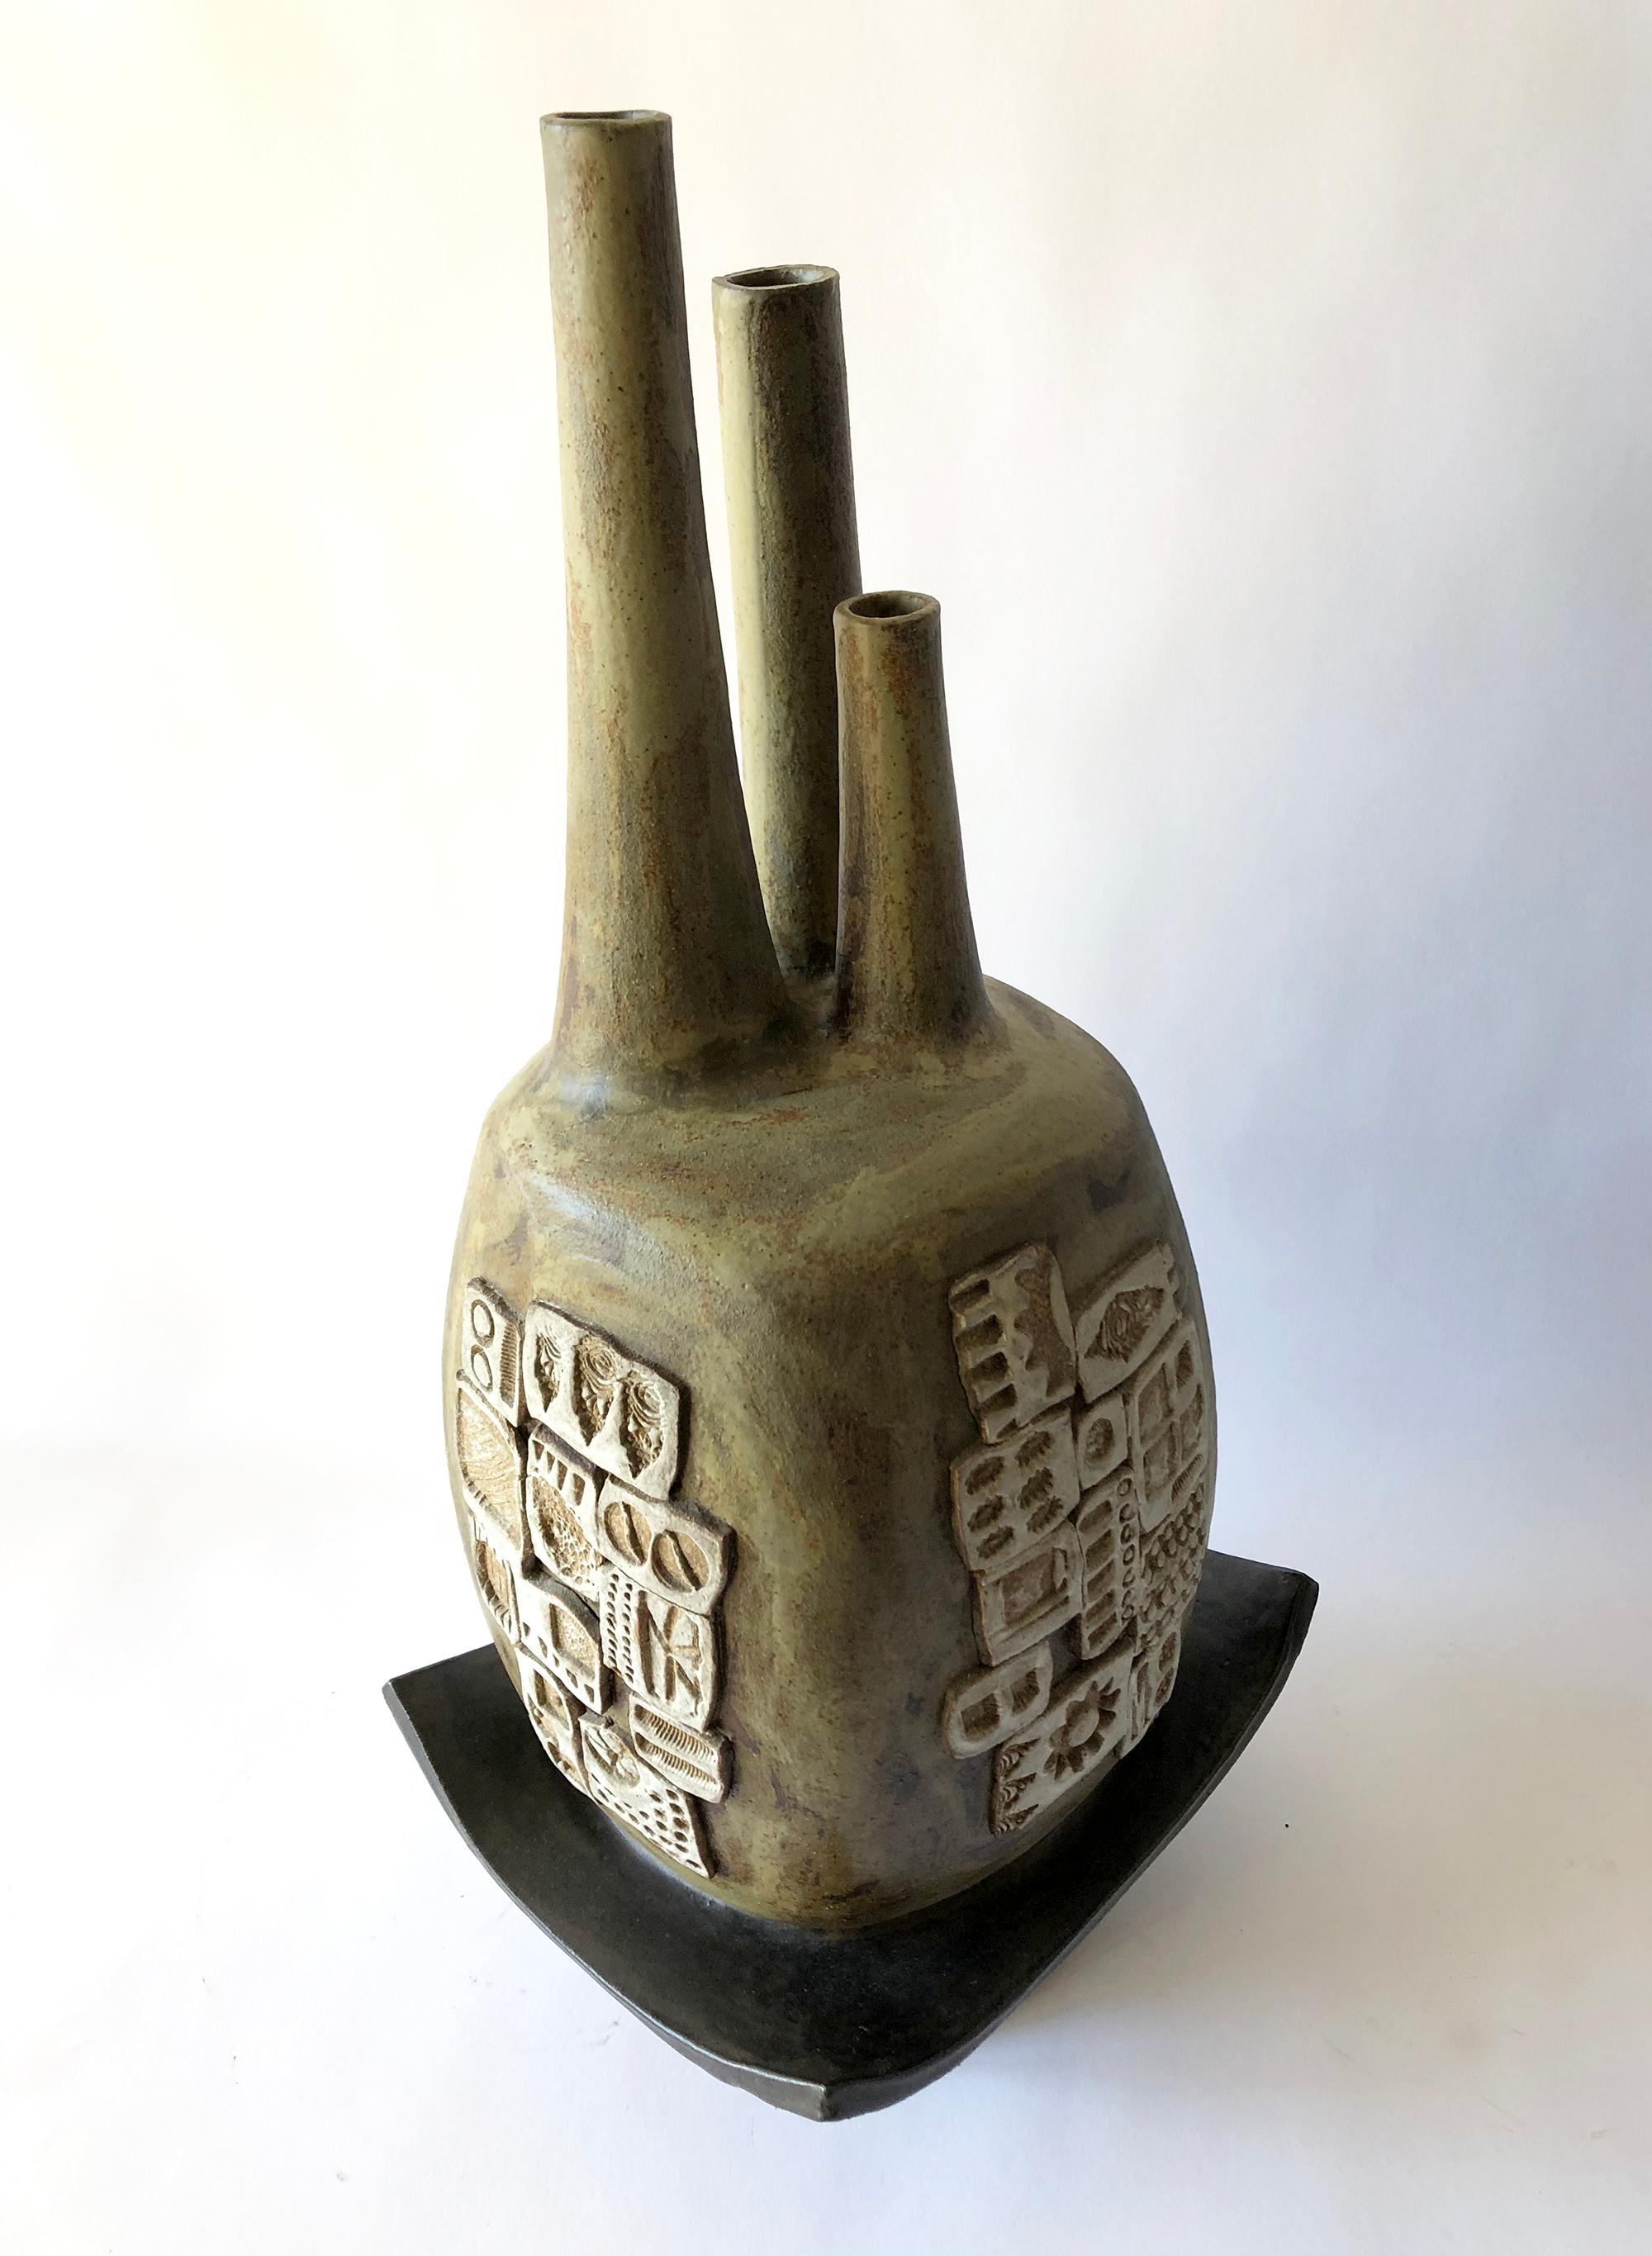 Triple spouted ceramic sculpture vessel created by California studio potter Joel Edwards. Piece measures 24